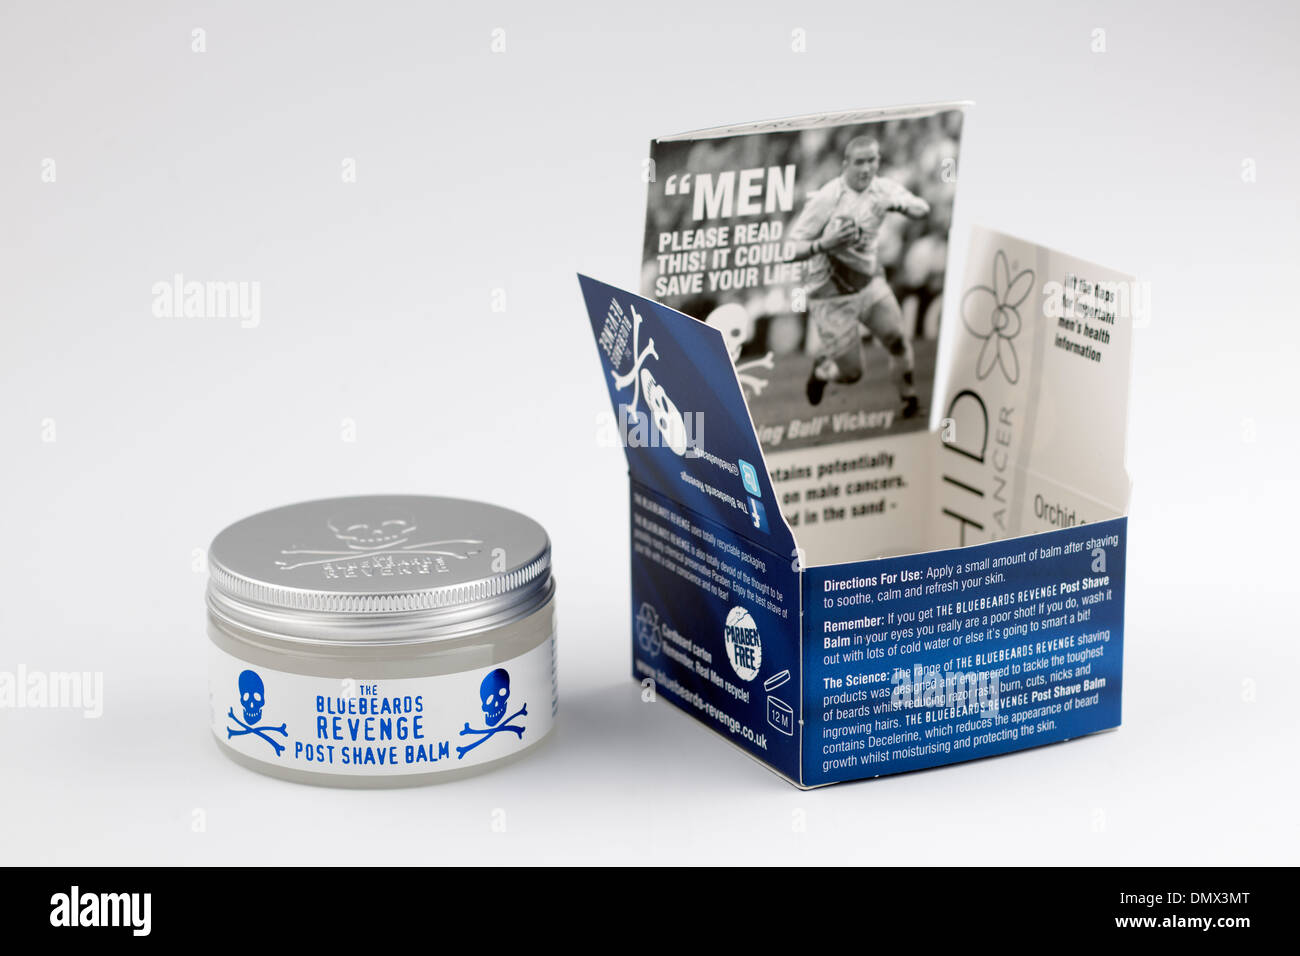 Jar of Bluebeards revenge post shave balm and box Stock Photo